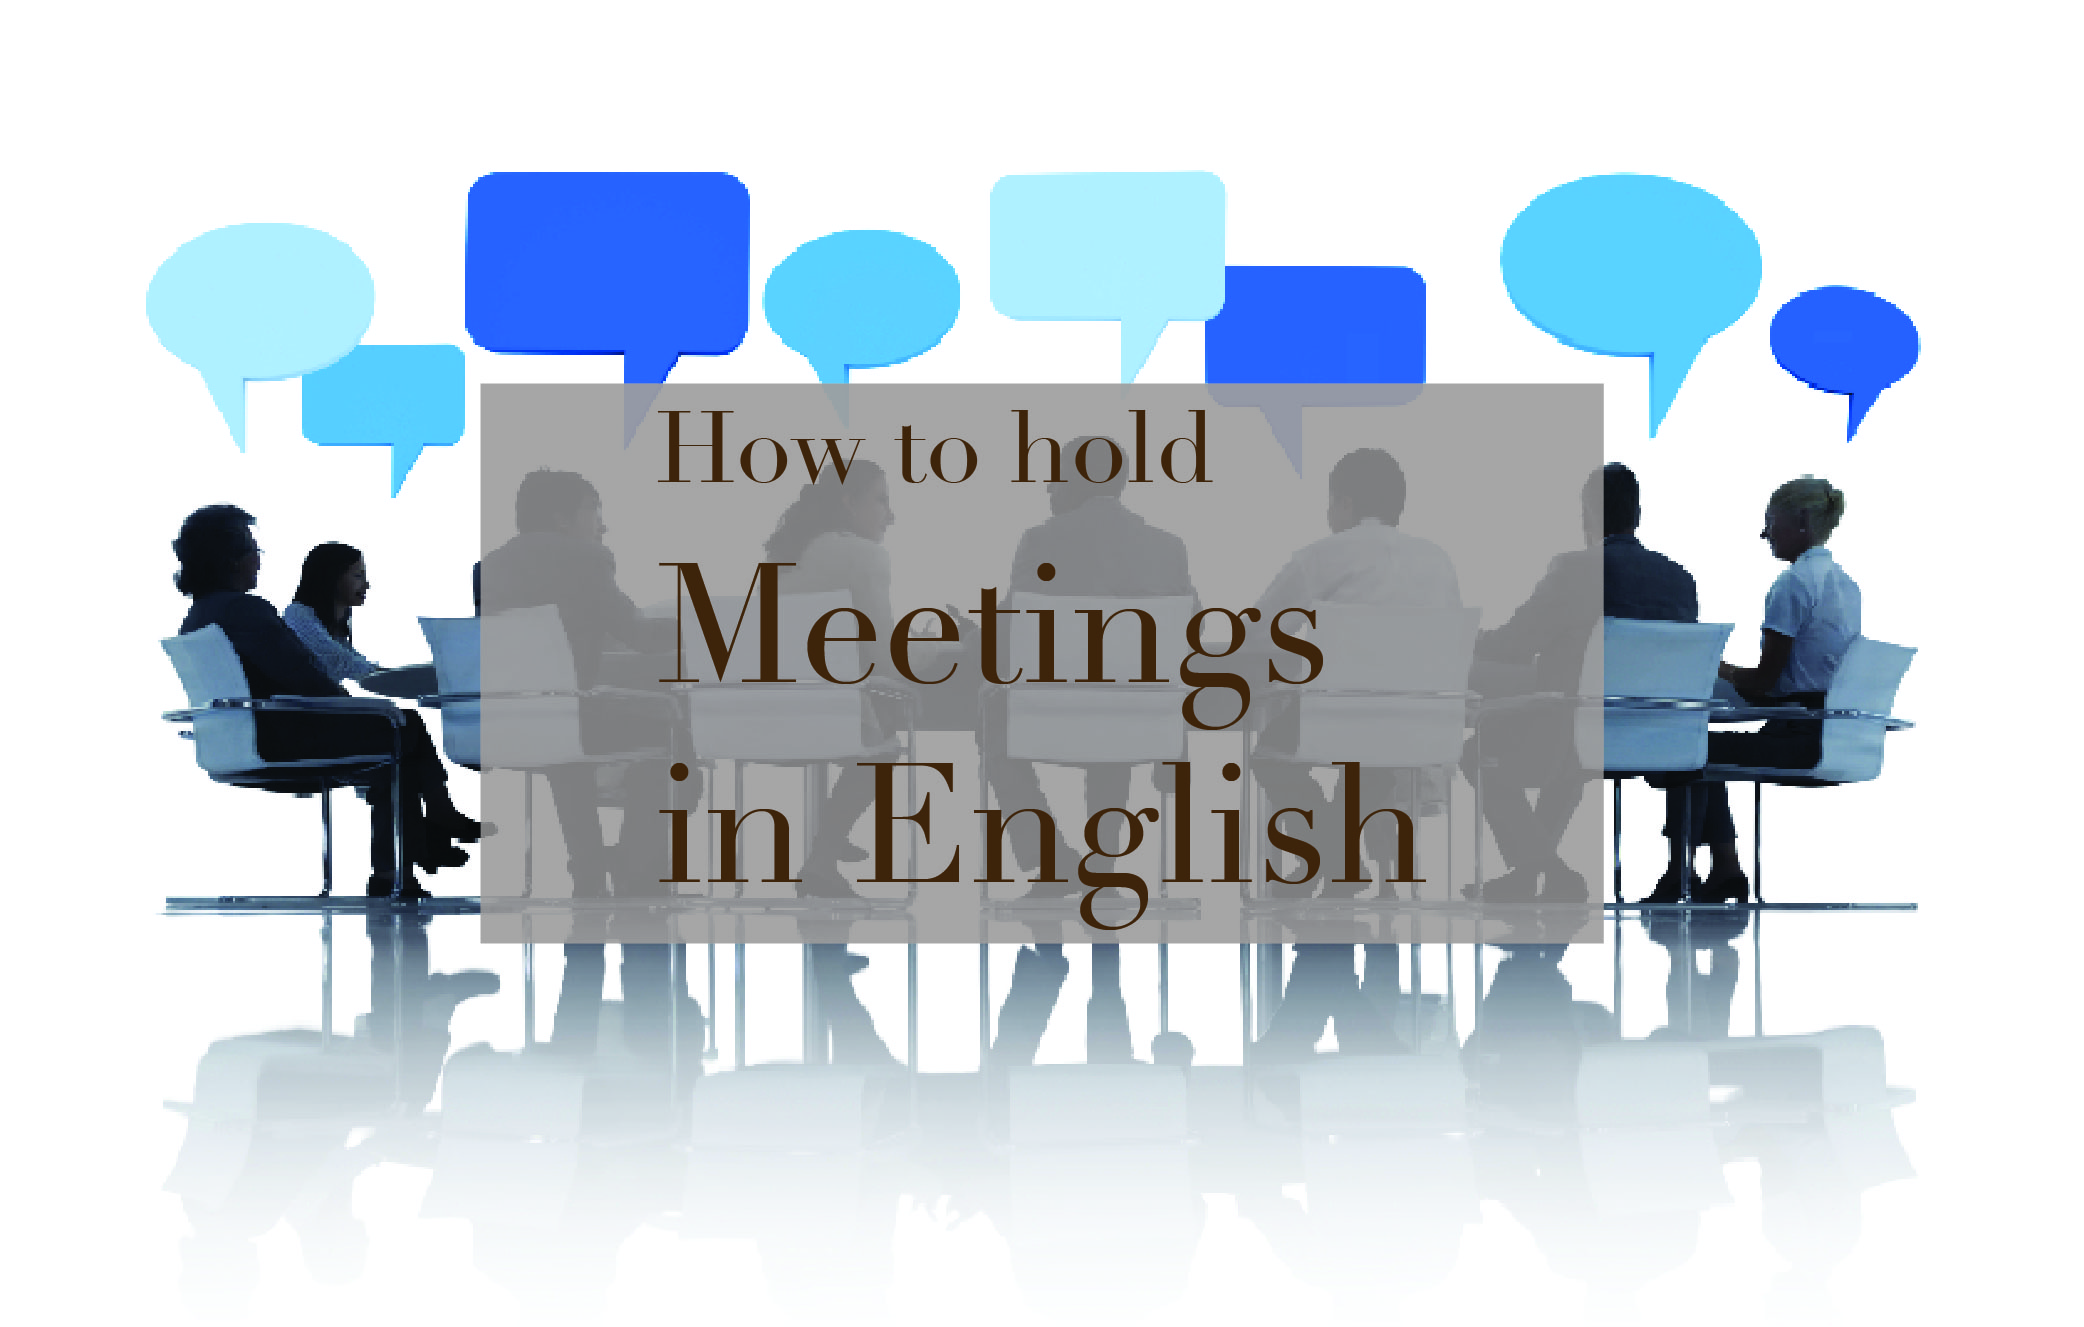 آموزش مدیریت جلسه به انگلیسی – How to hold meetings in English